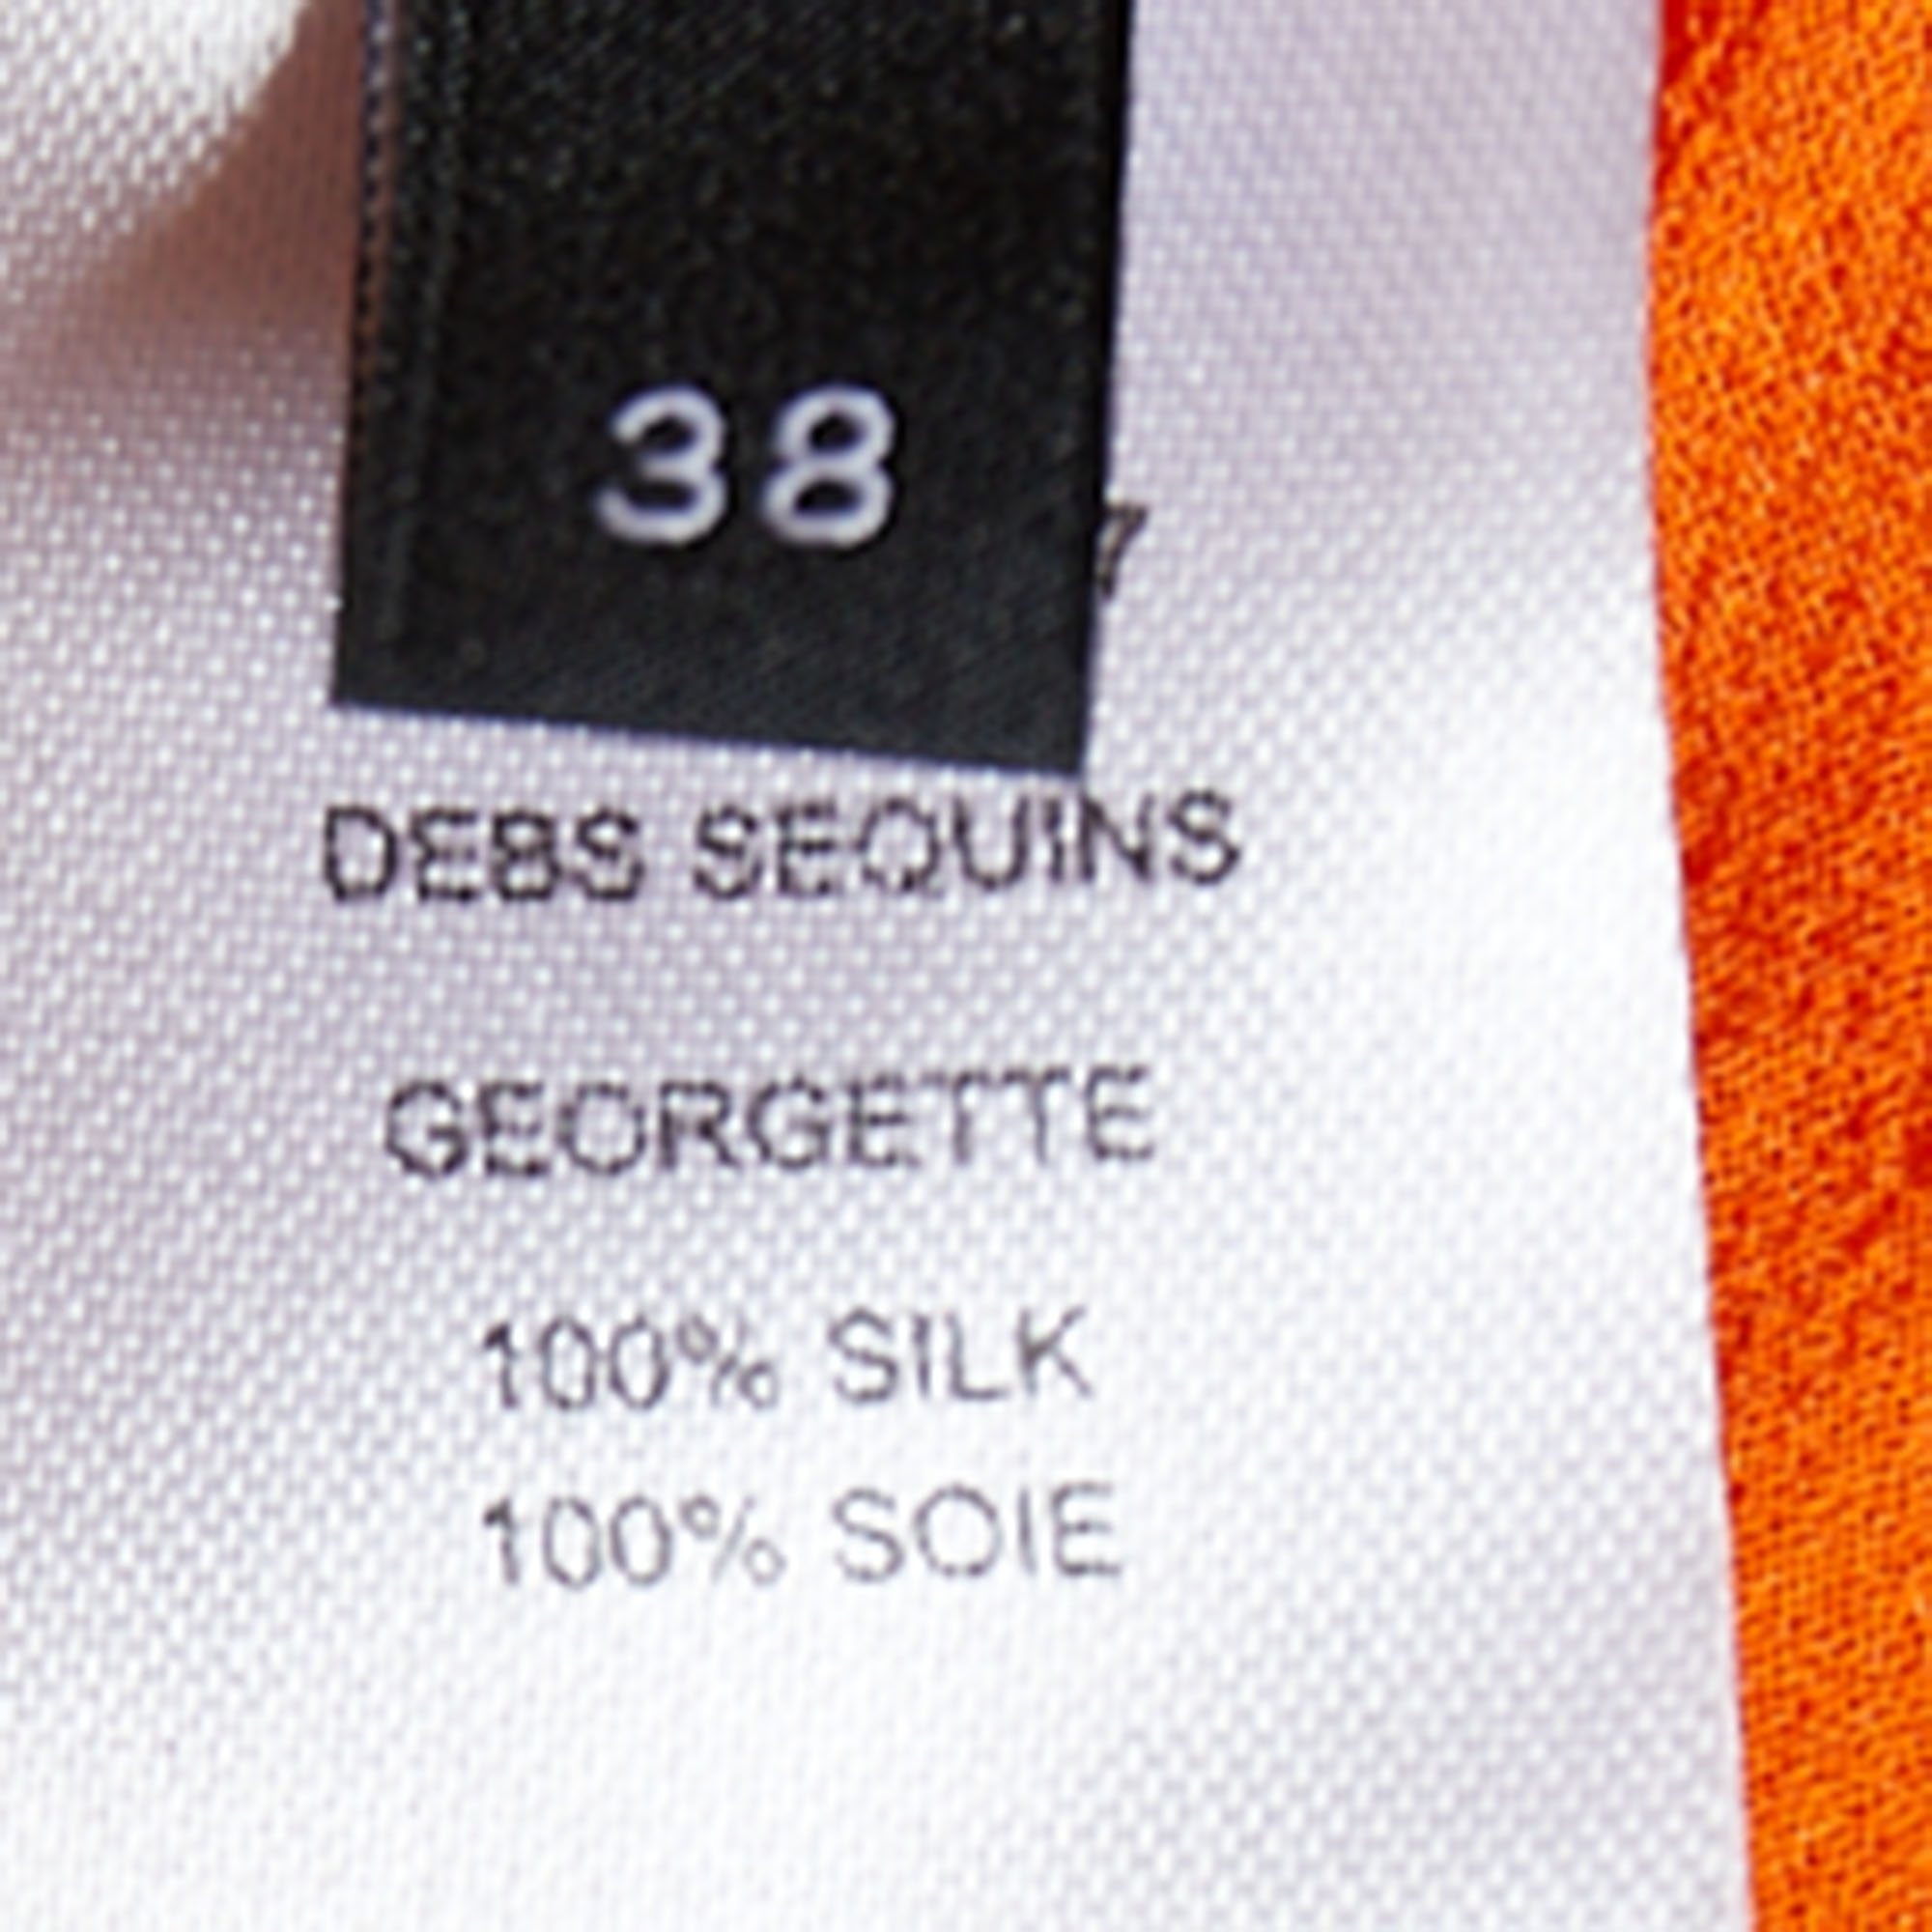 Joseph Orange Embellished Georgette Silk Sleeveless Shift Dress